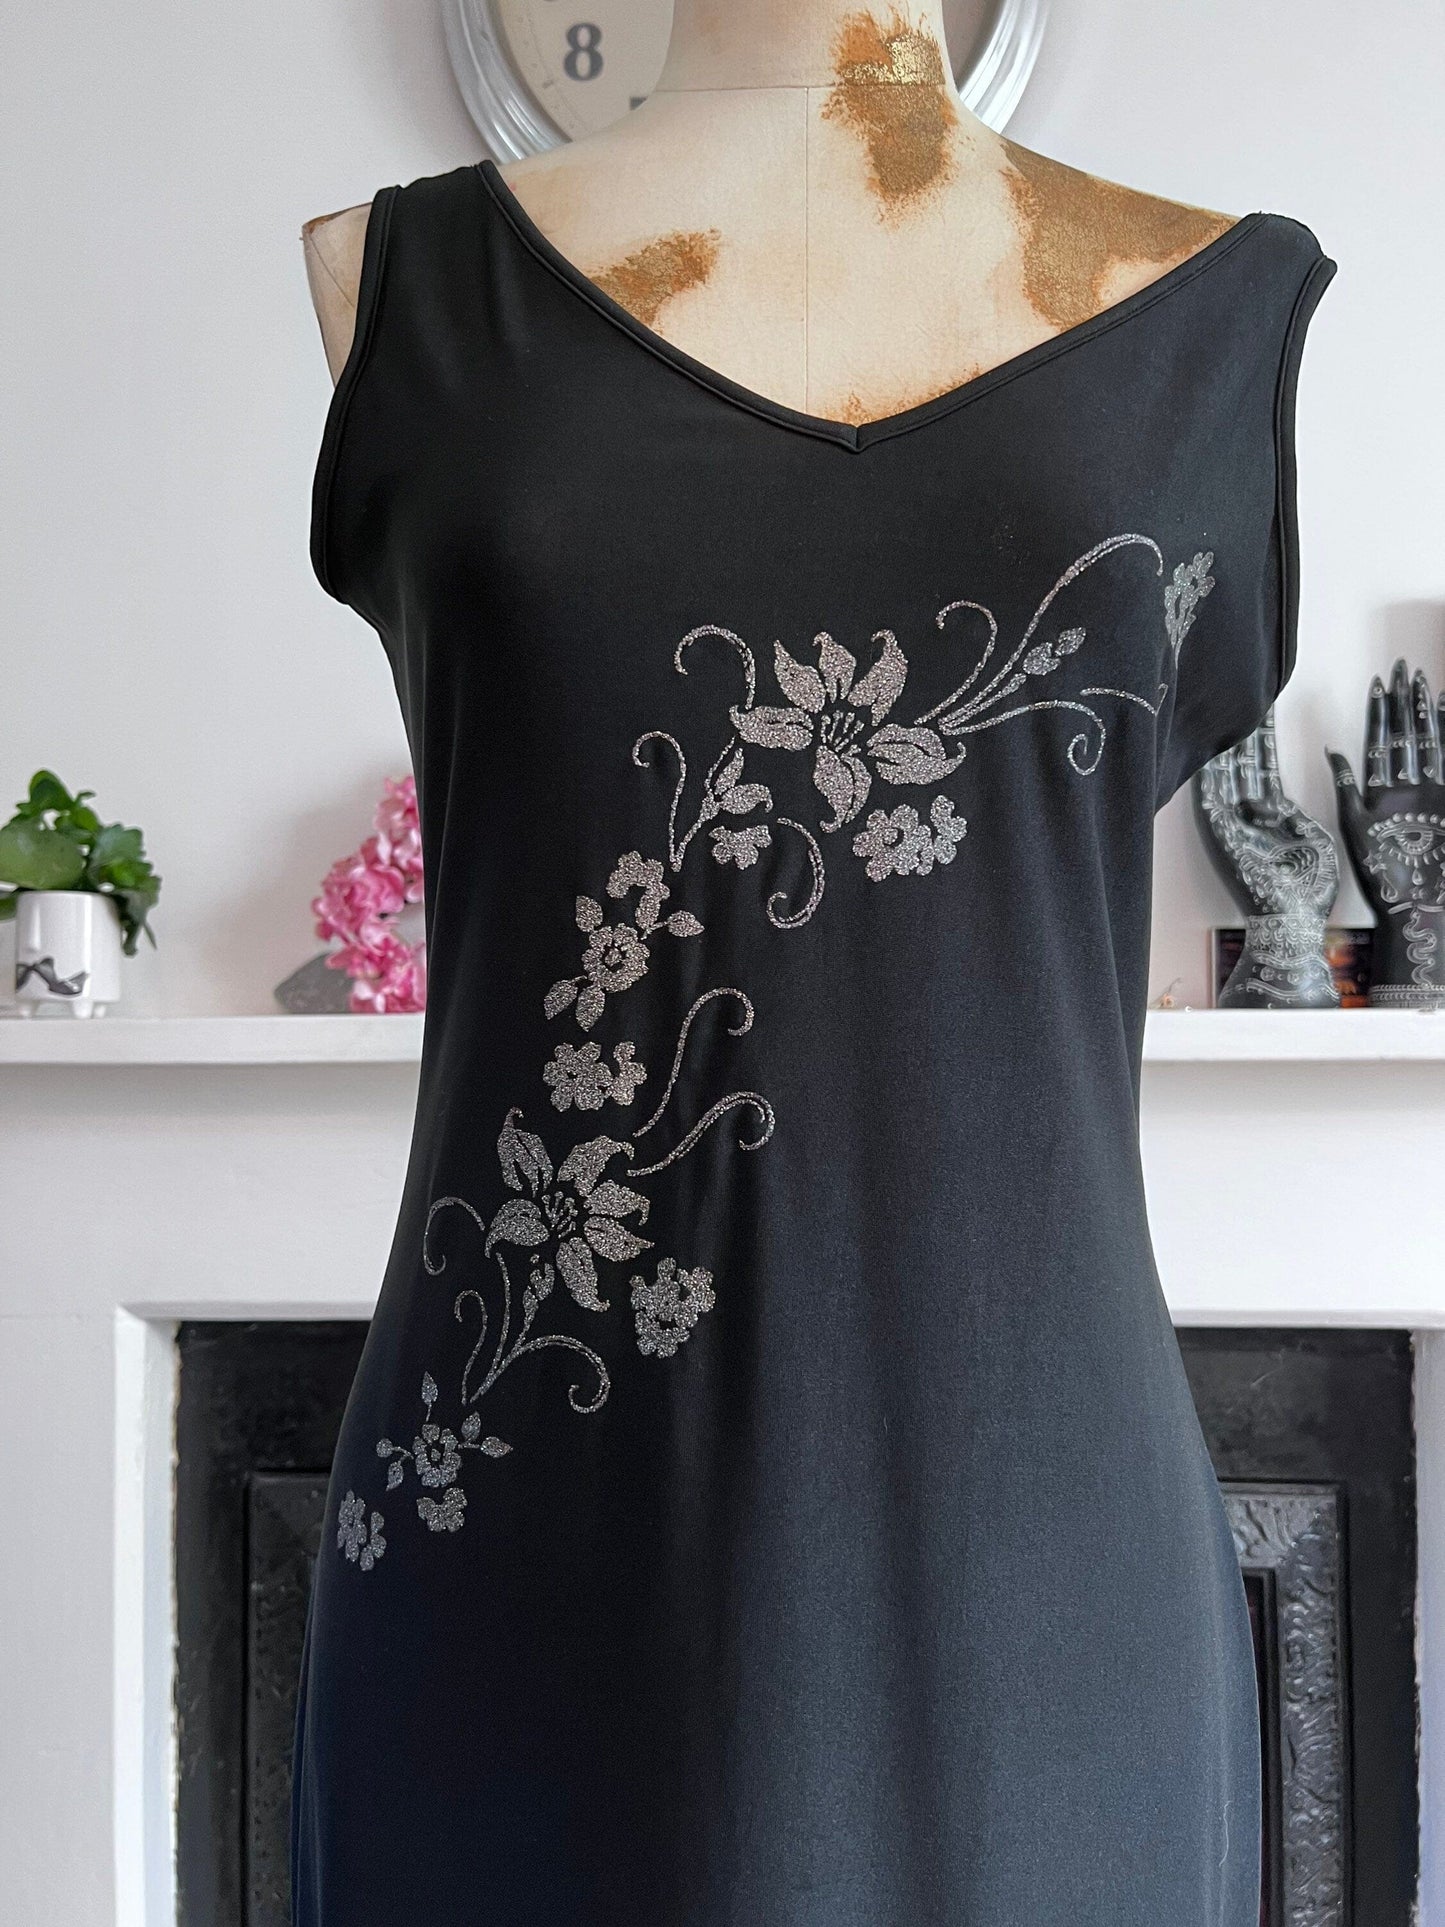 Vintage Black Silver Floral midi Dress - Size UK8/12 Stretch Lycra Body Con Black & Silver Dress with side split